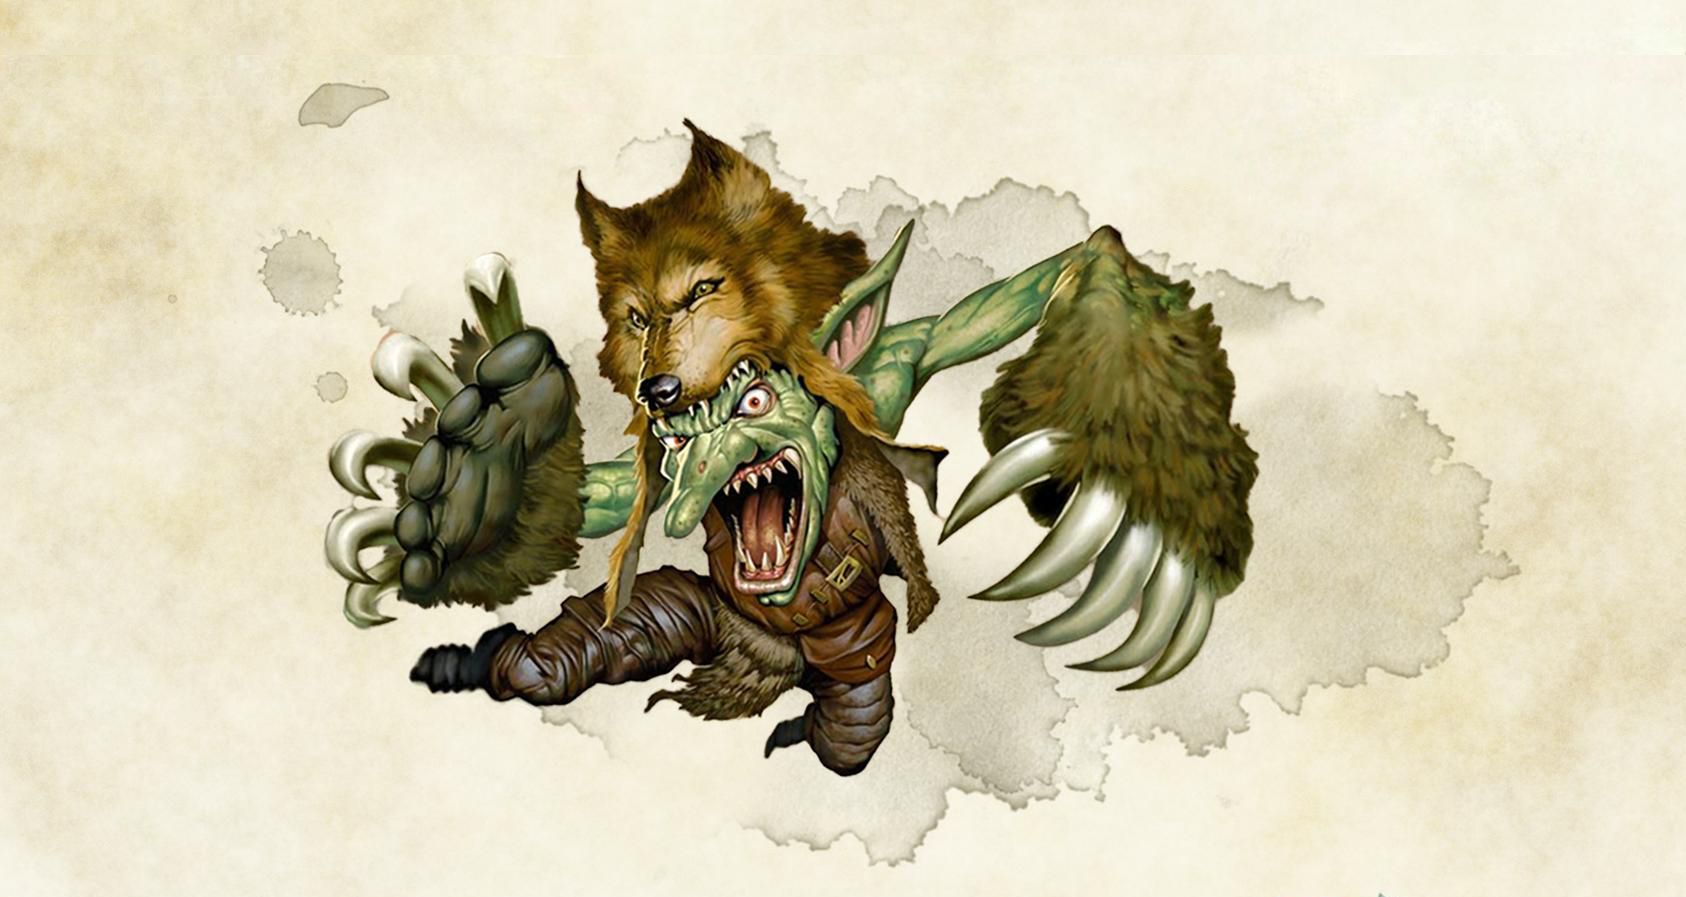 A goblin with bear claws from DnD 5e